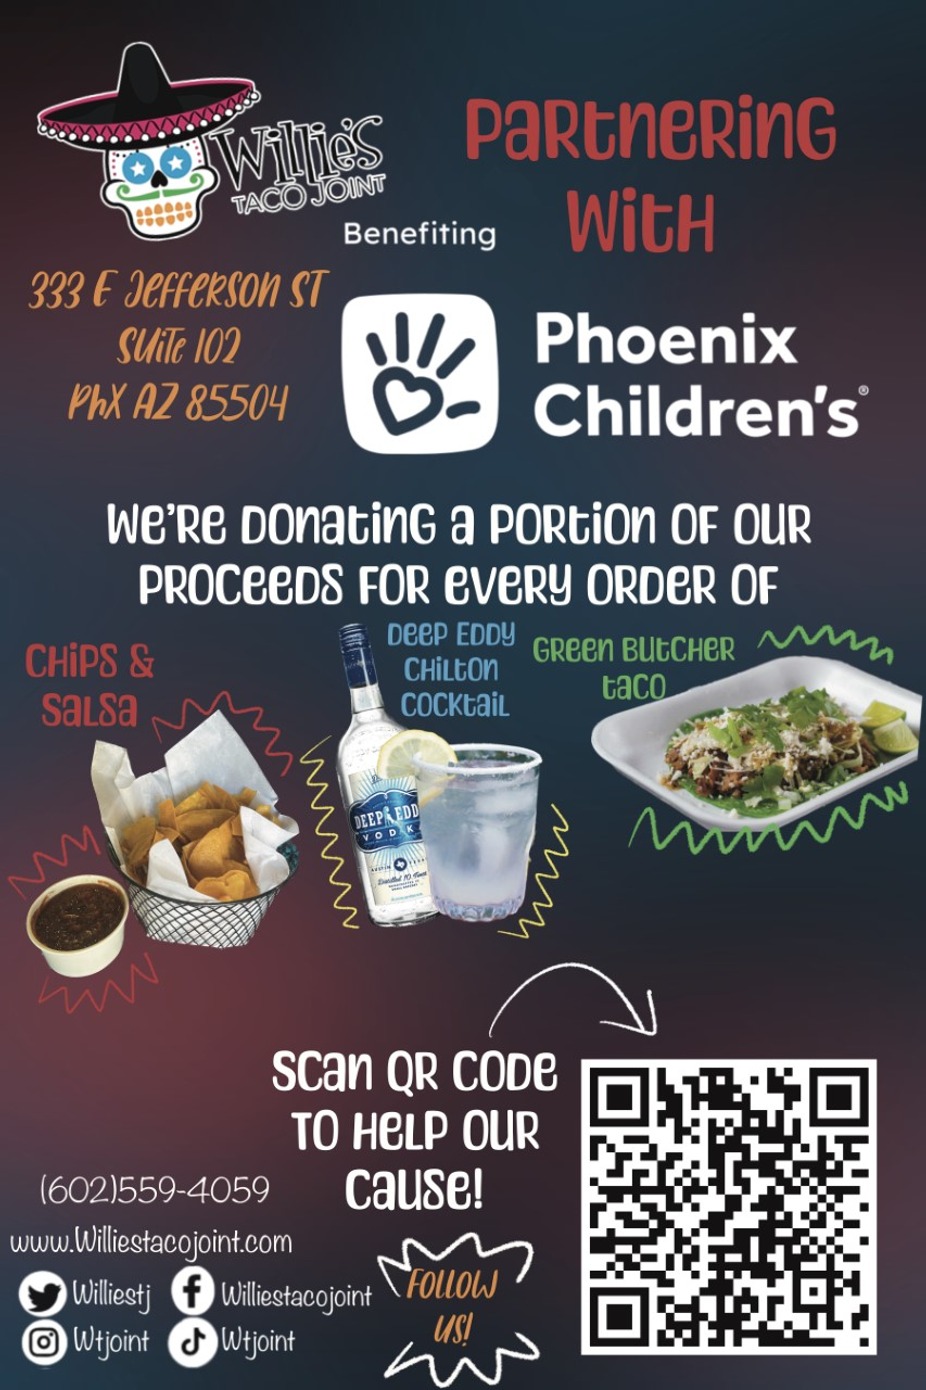 Phoenix Childrens event photo